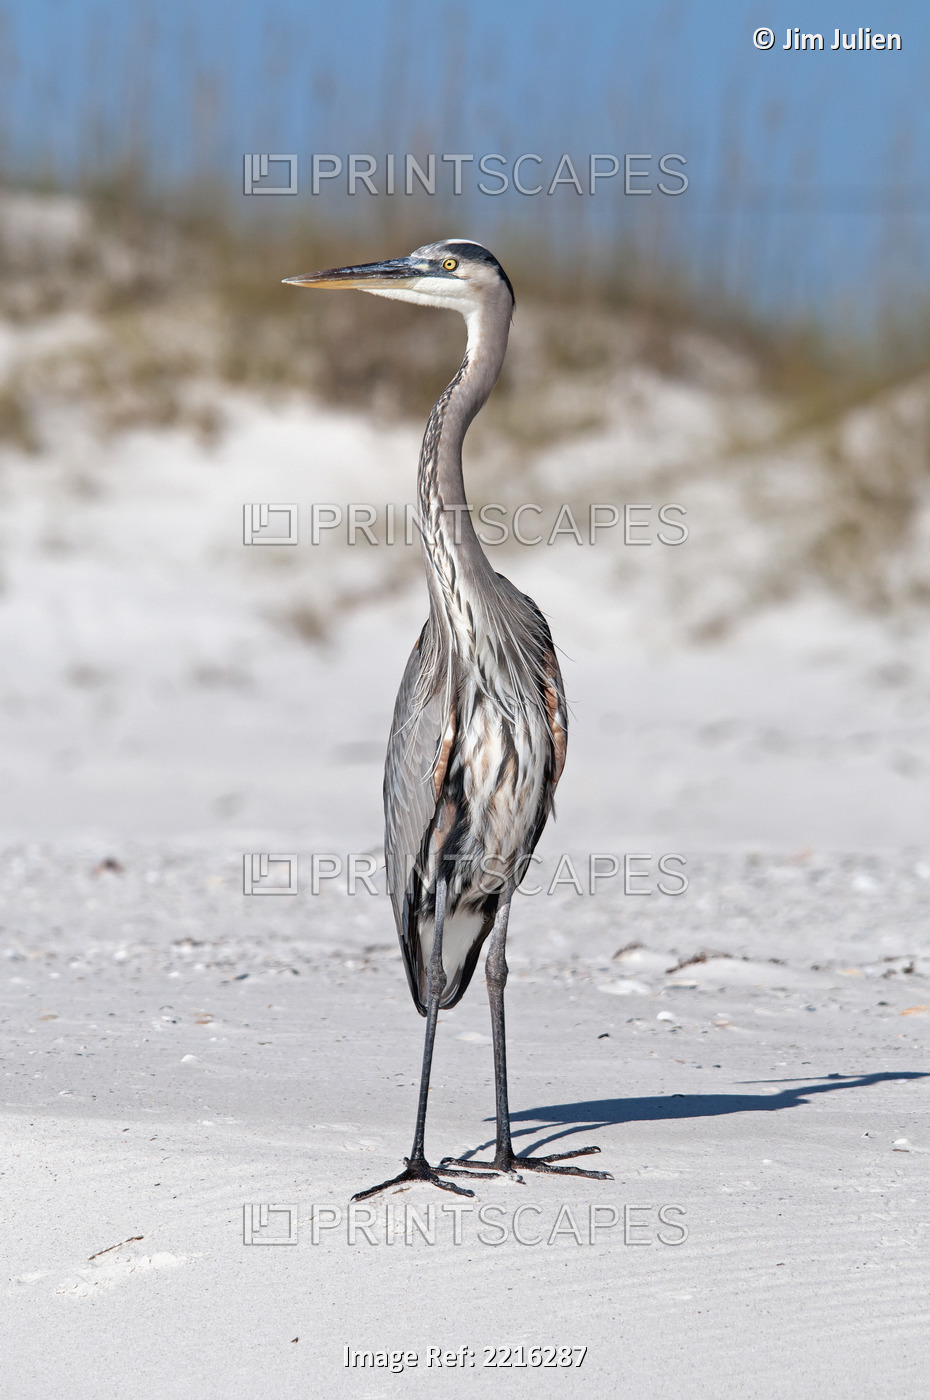 Blue heron on the sand;Gulf shores alabama united states of america